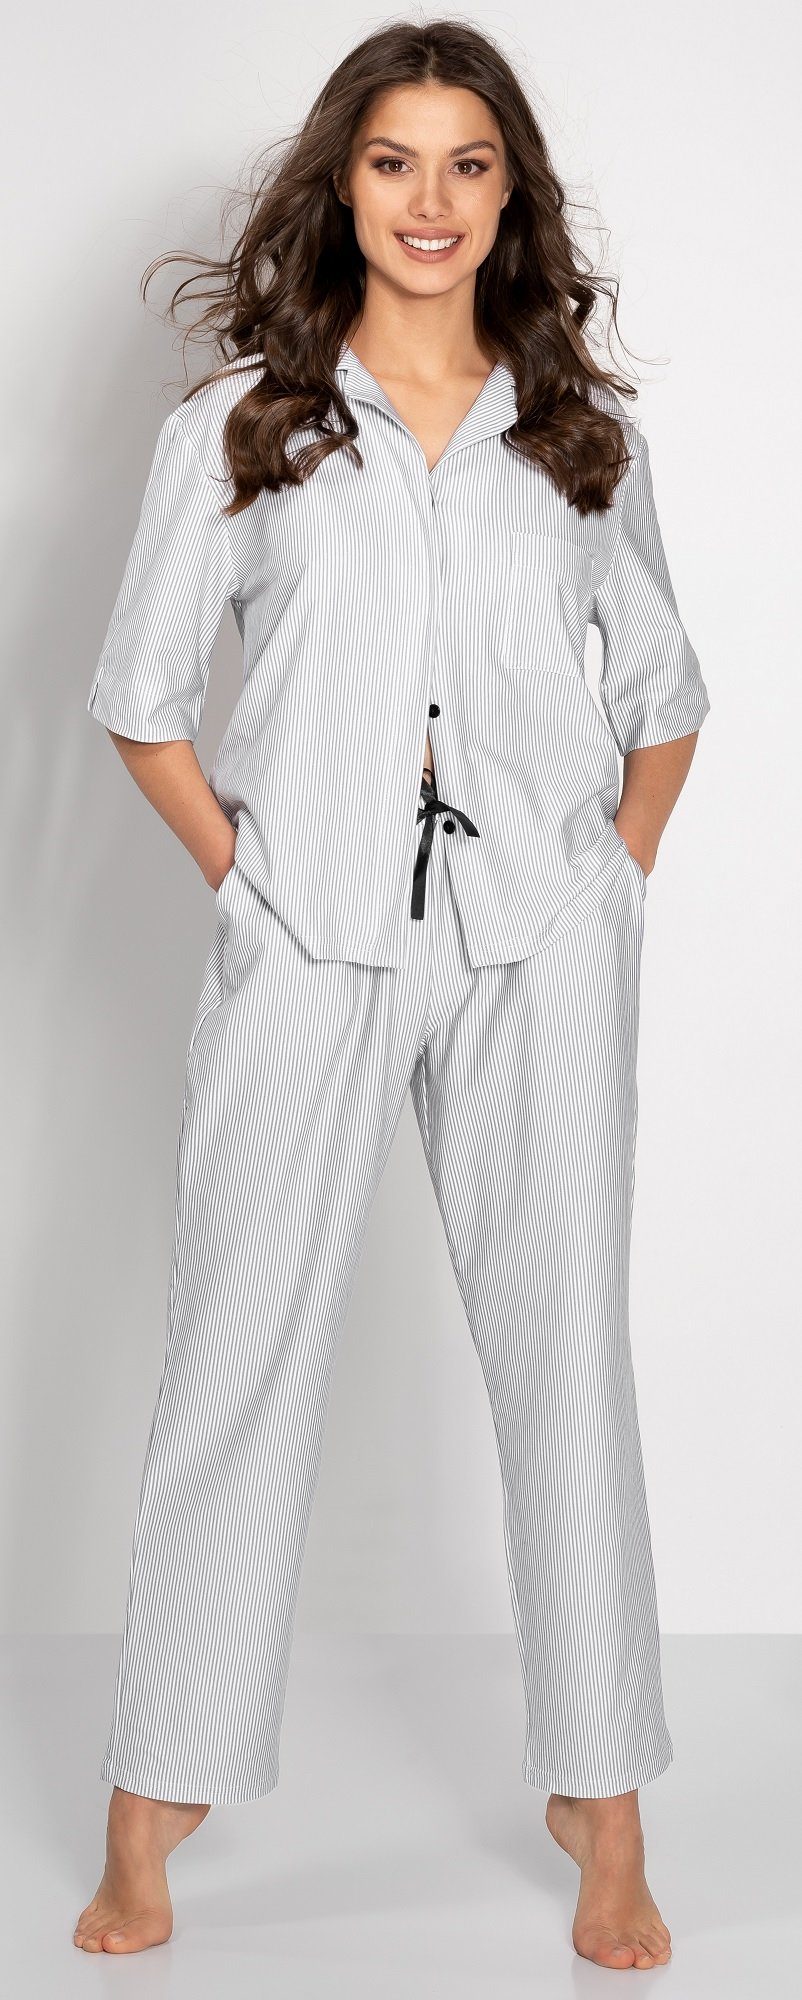 Momenti per me Schlafanzug elegant, 2teiliger Pyjama Oversize-Style | Pyjamas